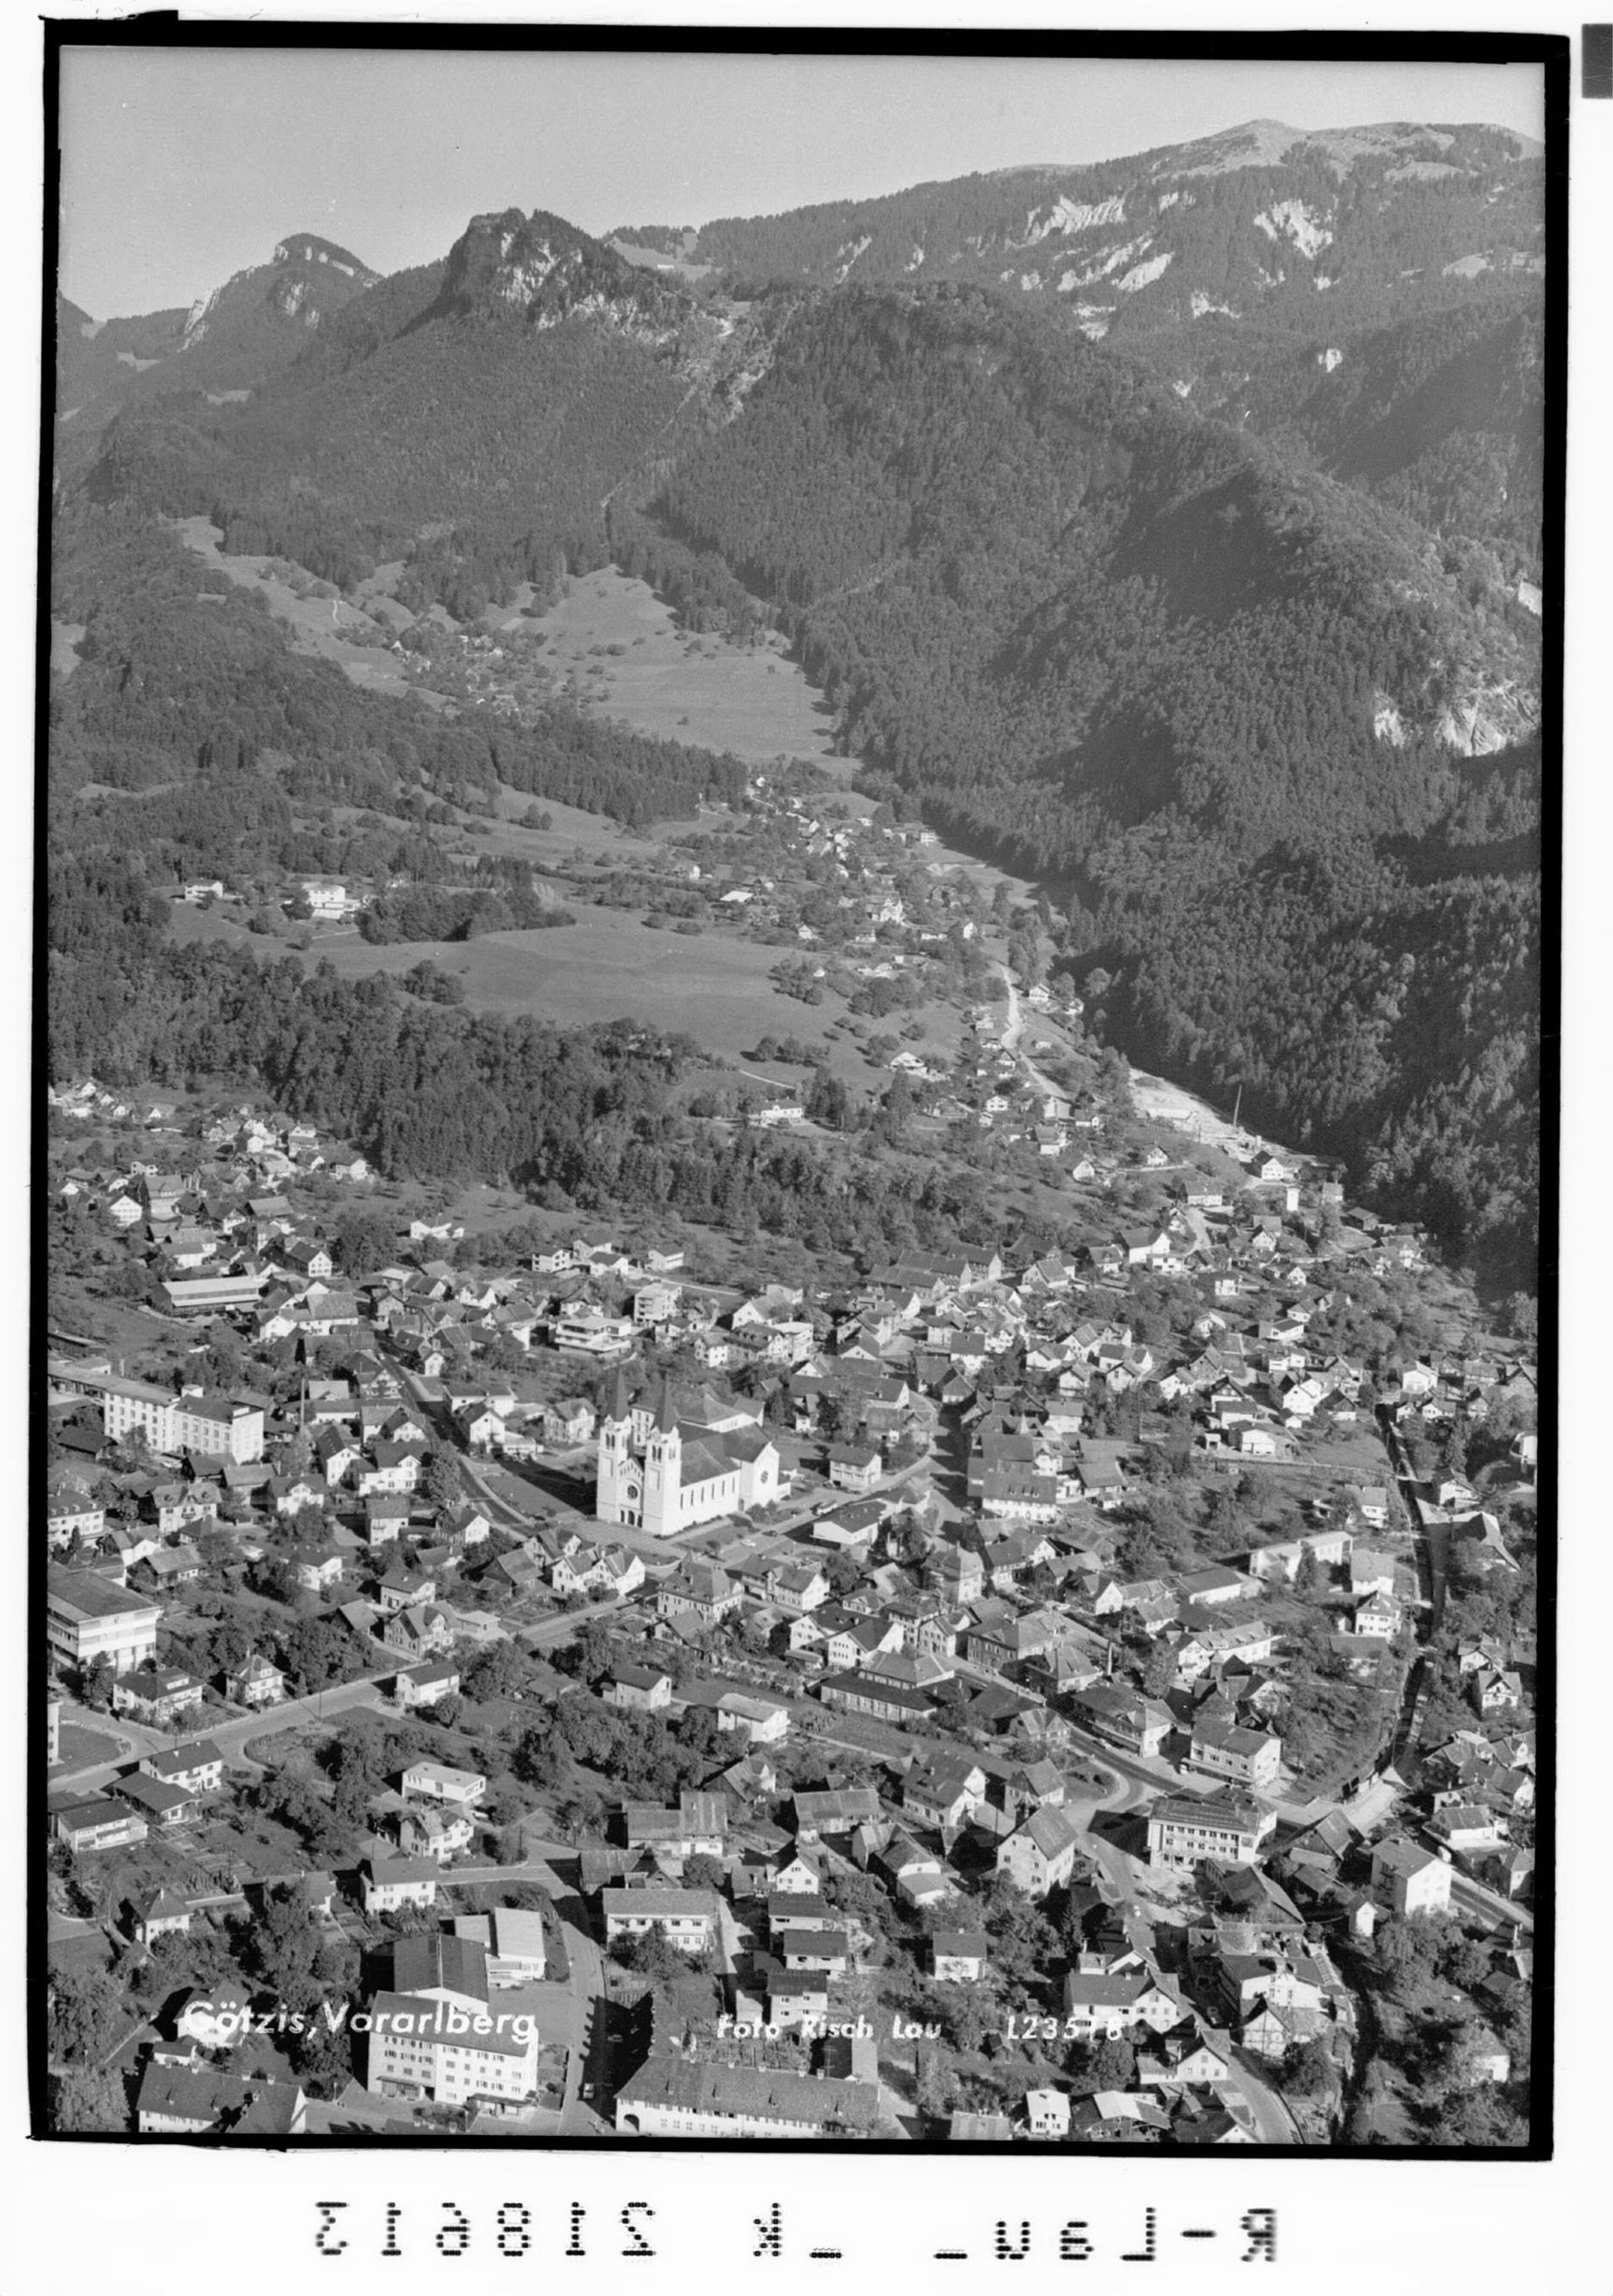 Götzis, Vorarlberg></div>


    <hr>
    <div class=